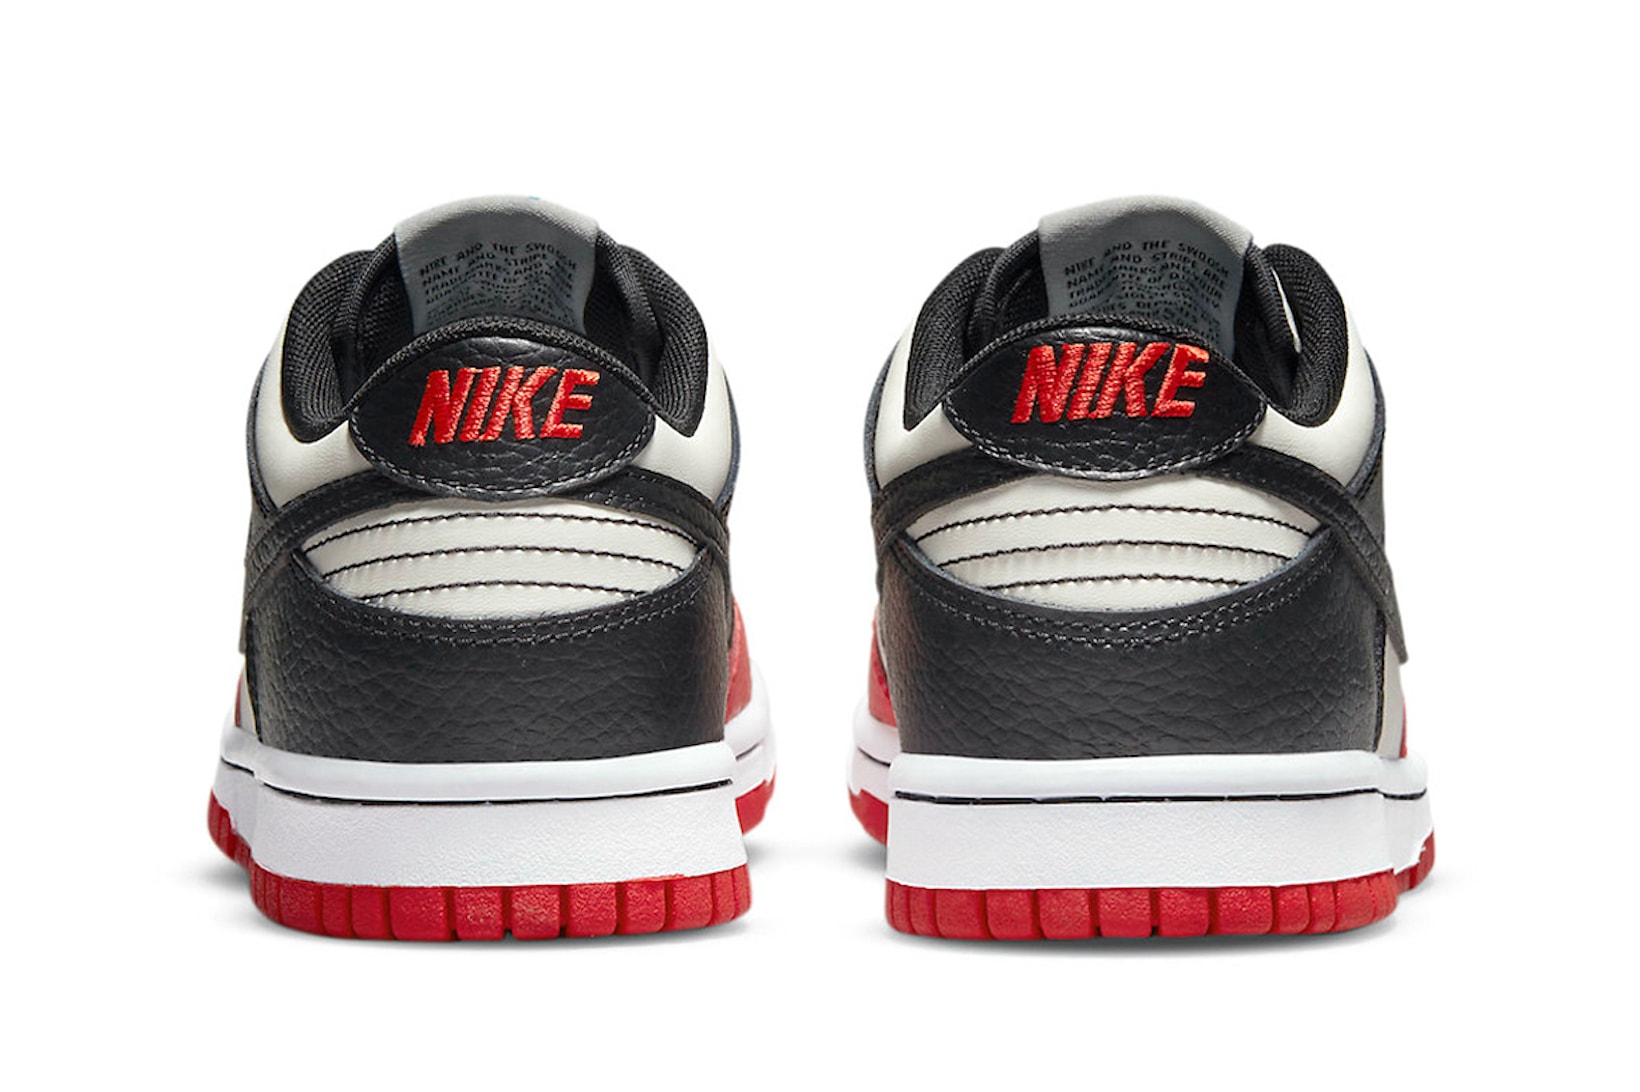 NBA Nike Dunk Low EMB Chicago Red Black White Sneakers Footwear Shoes Kicks Heel